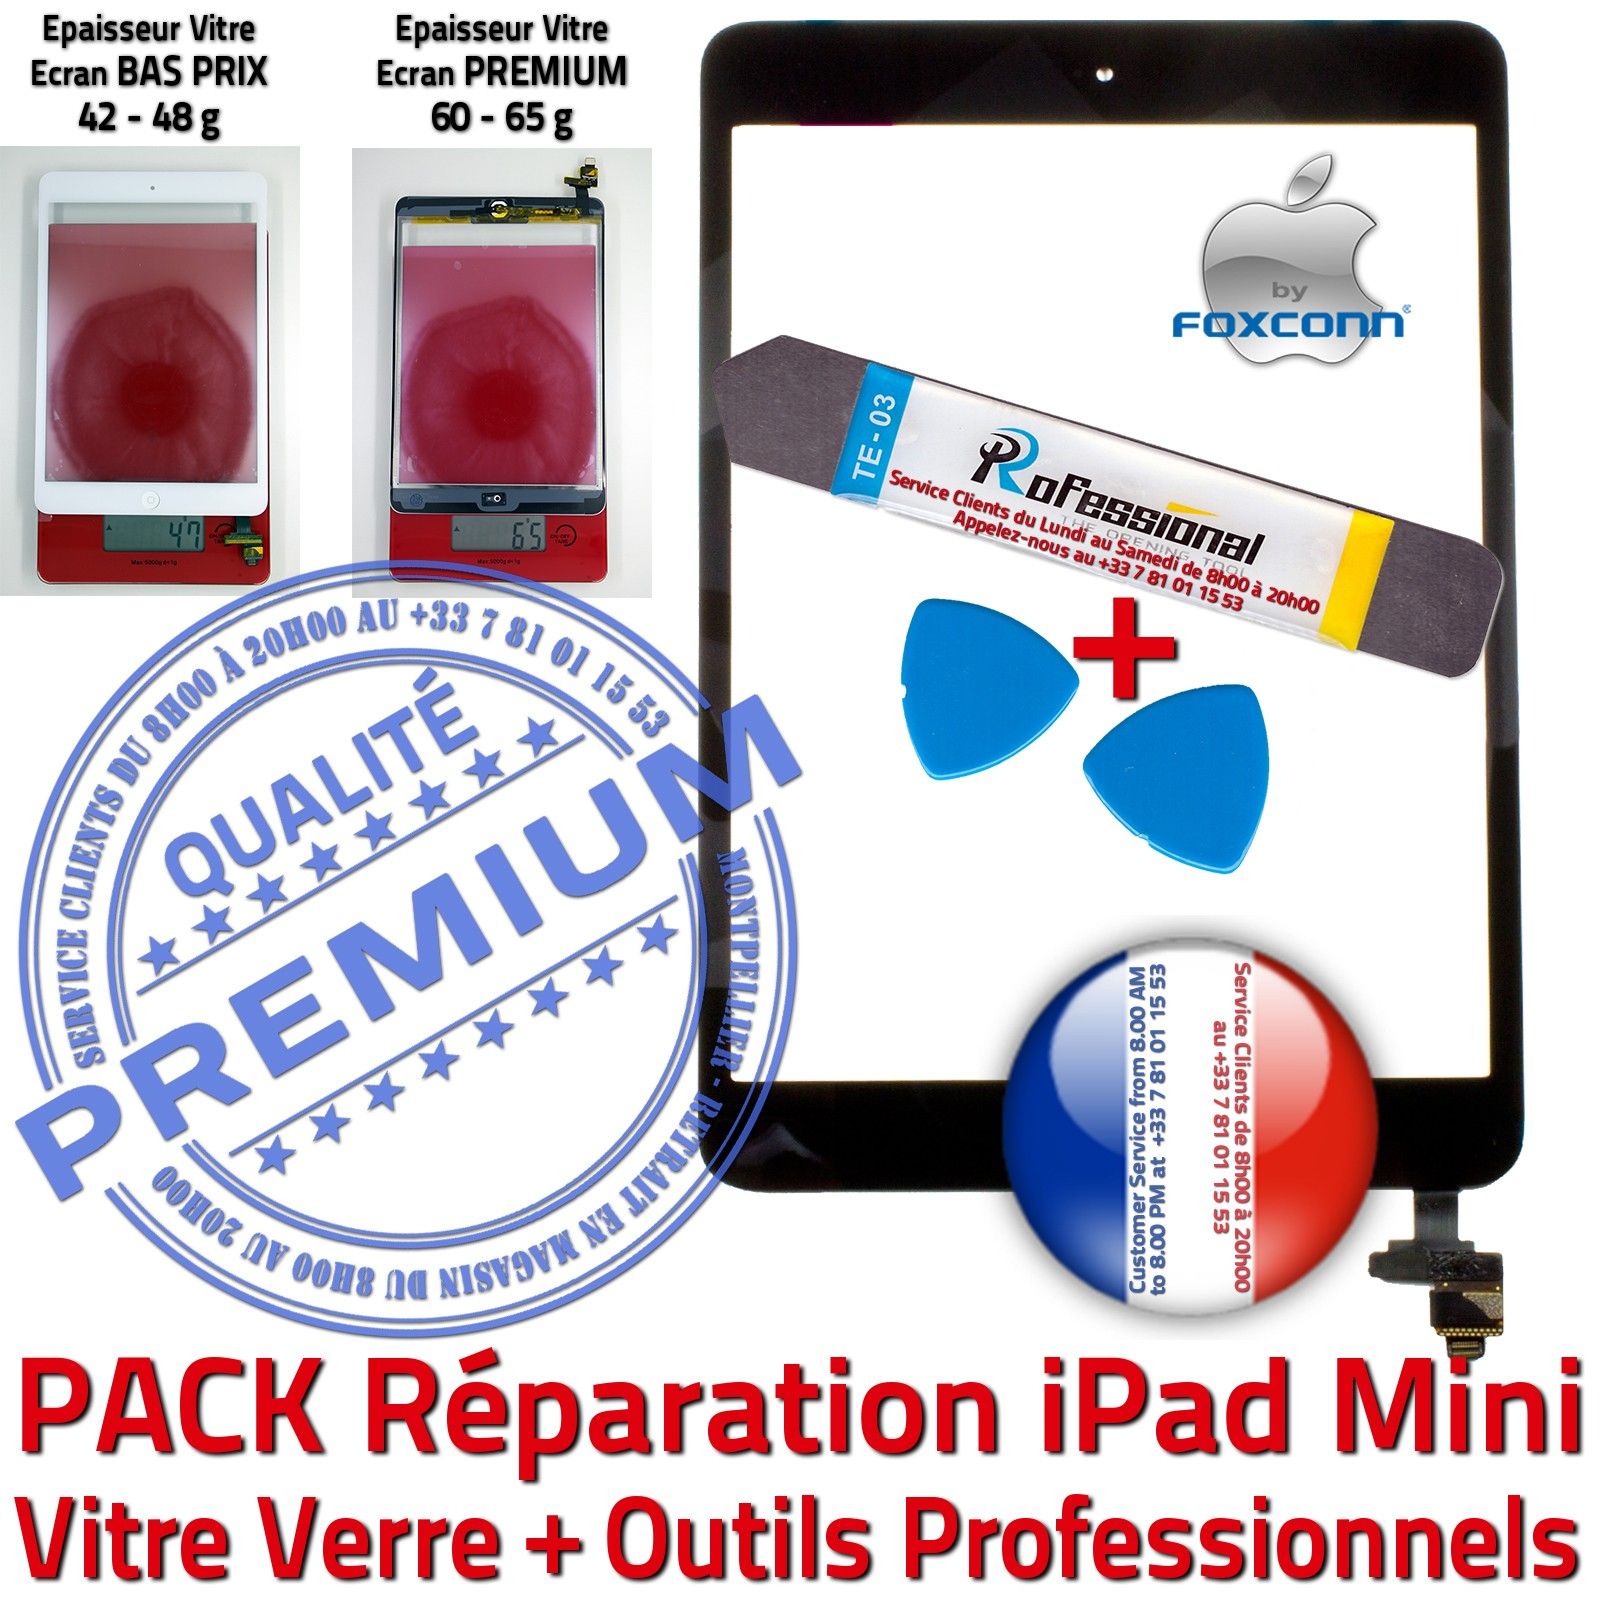 Verre Trempé iPad 2021 10.2 inch Vitre Ecran Film Protection Rayure Chocs  Impact